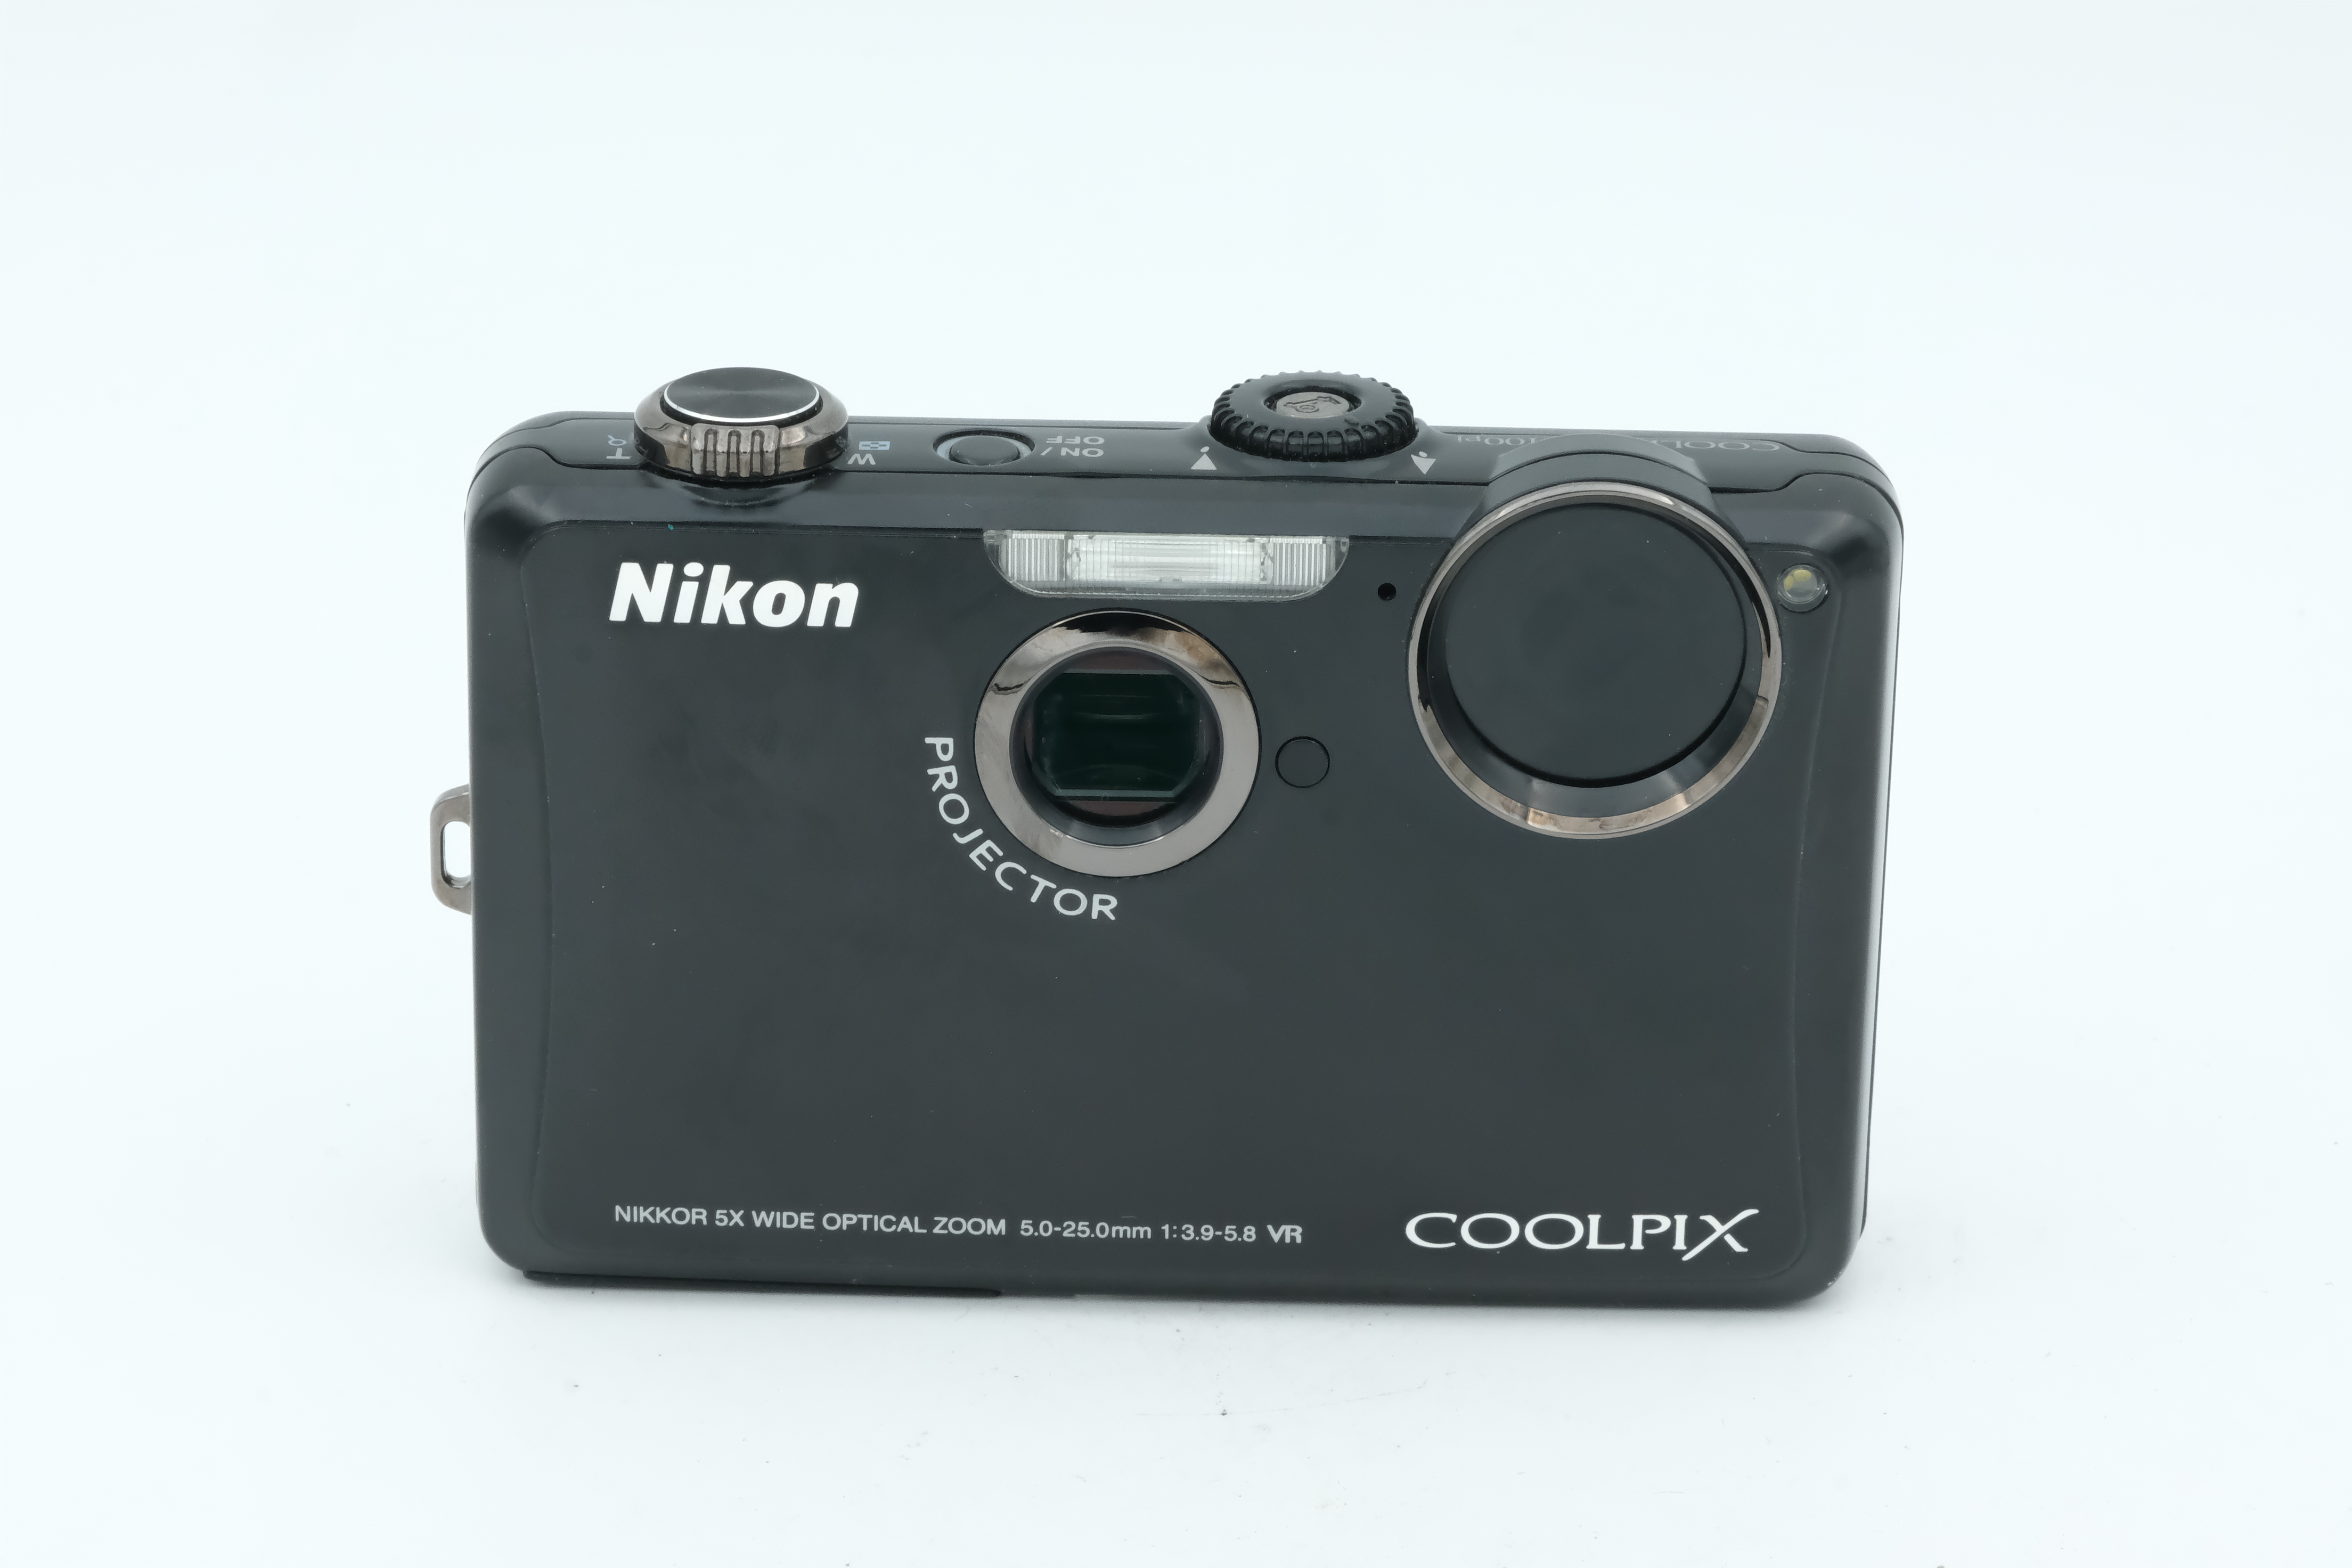 Nikon Coolpix S1100pj, 28-140mm 3,9-5,8 VR